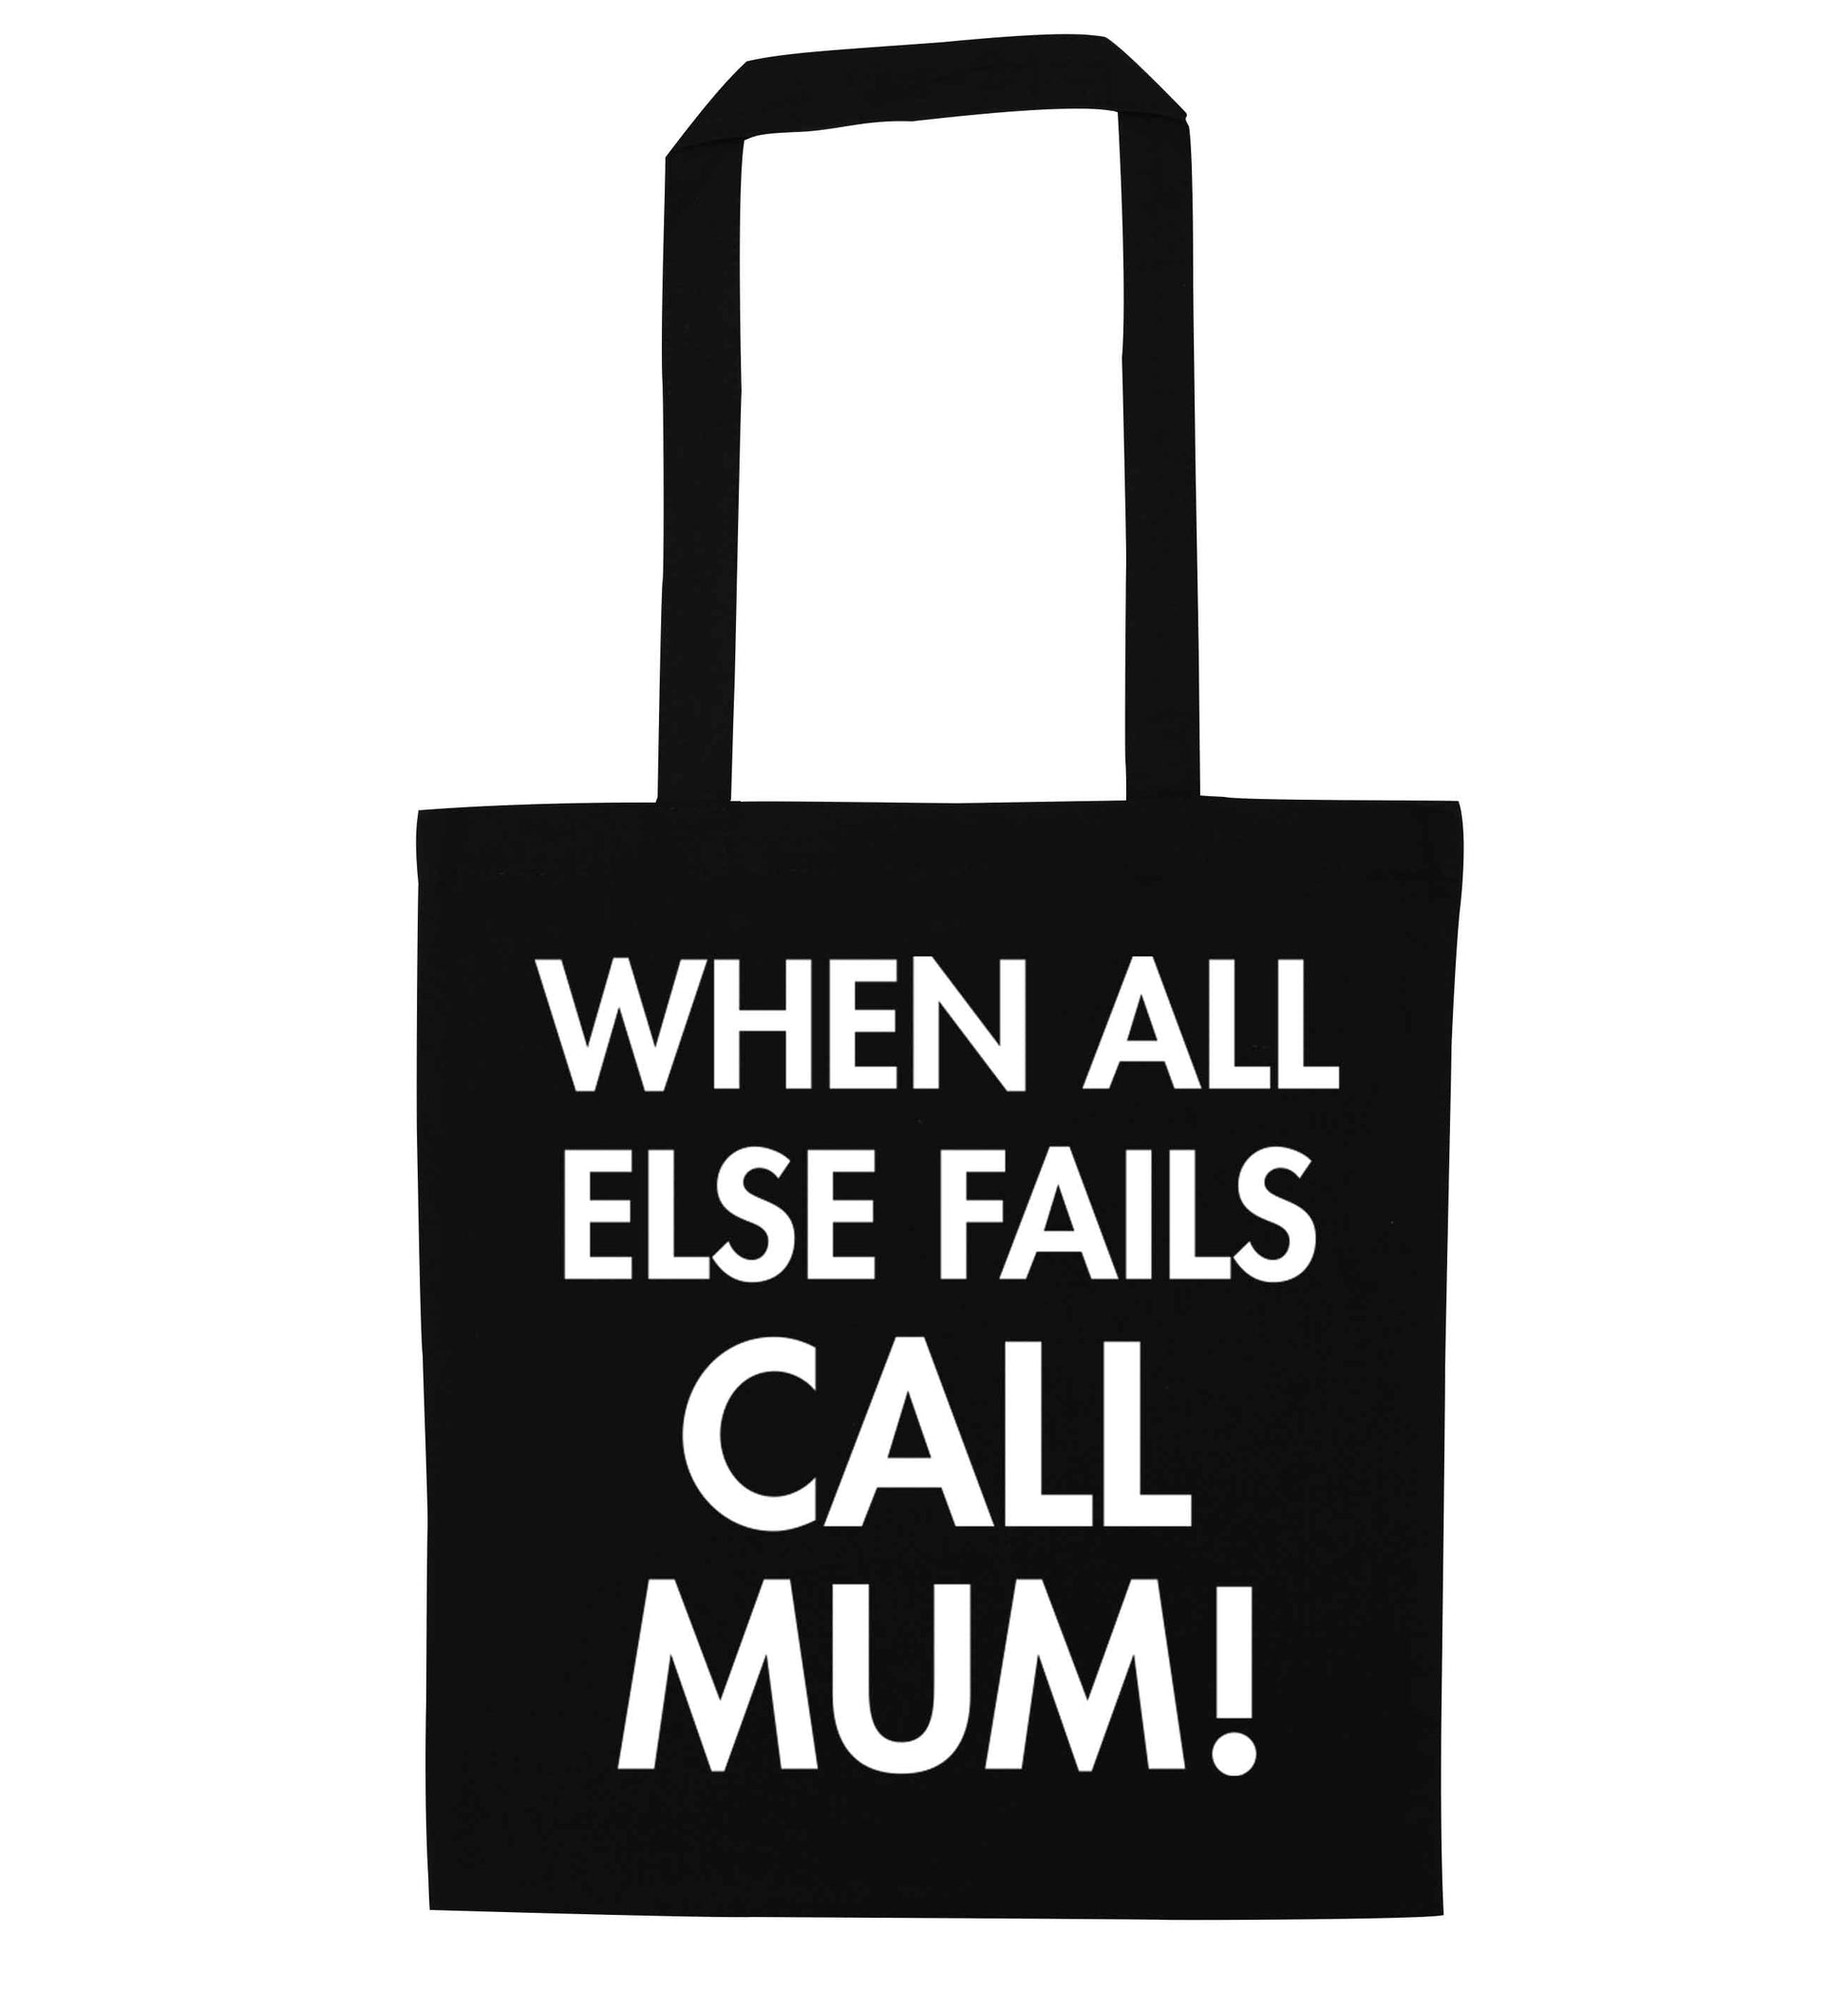 When all else fails call mum! black tote bag